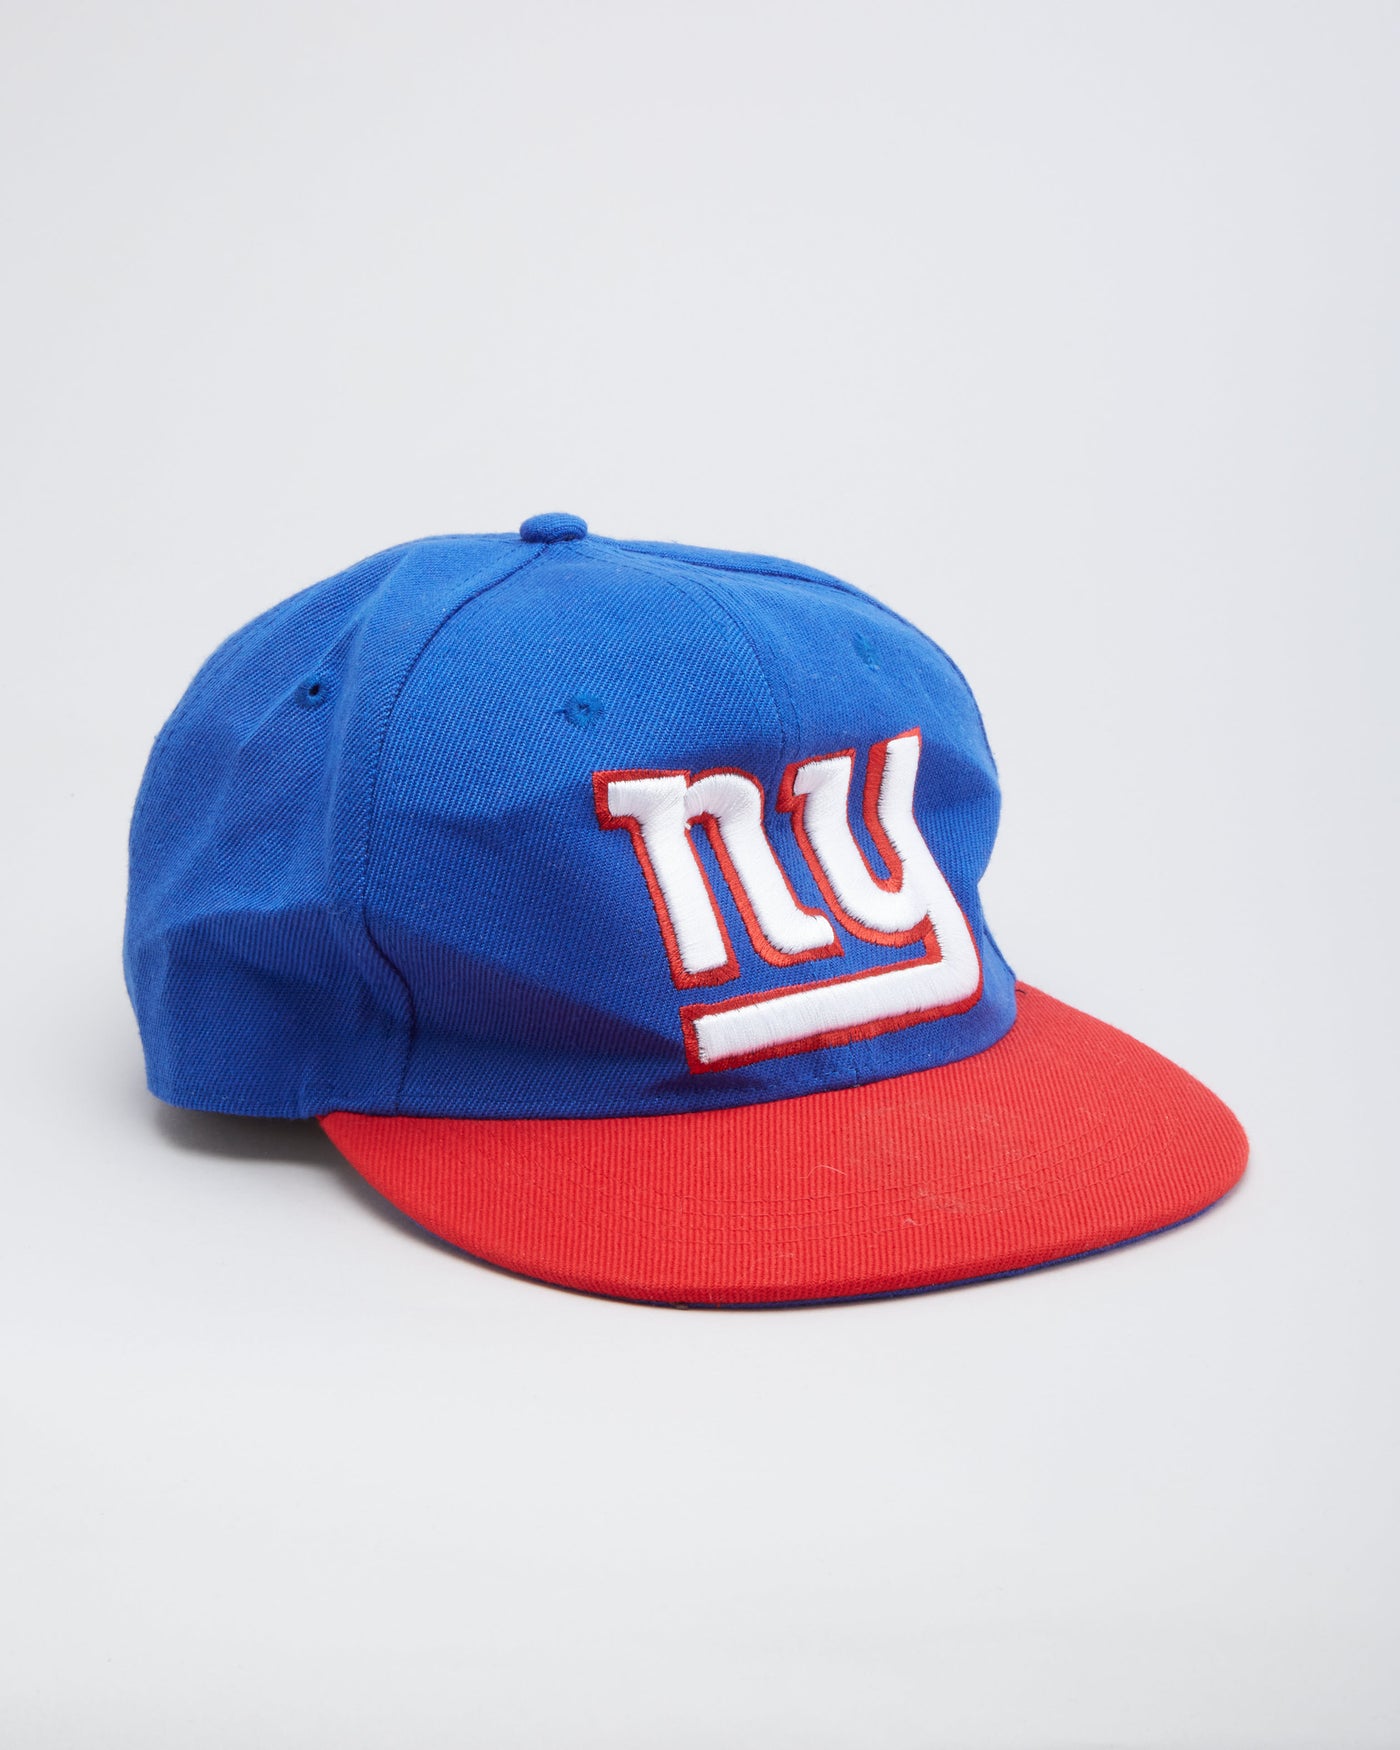 NY New York Giants NFL Blue / Red Snapback Hat